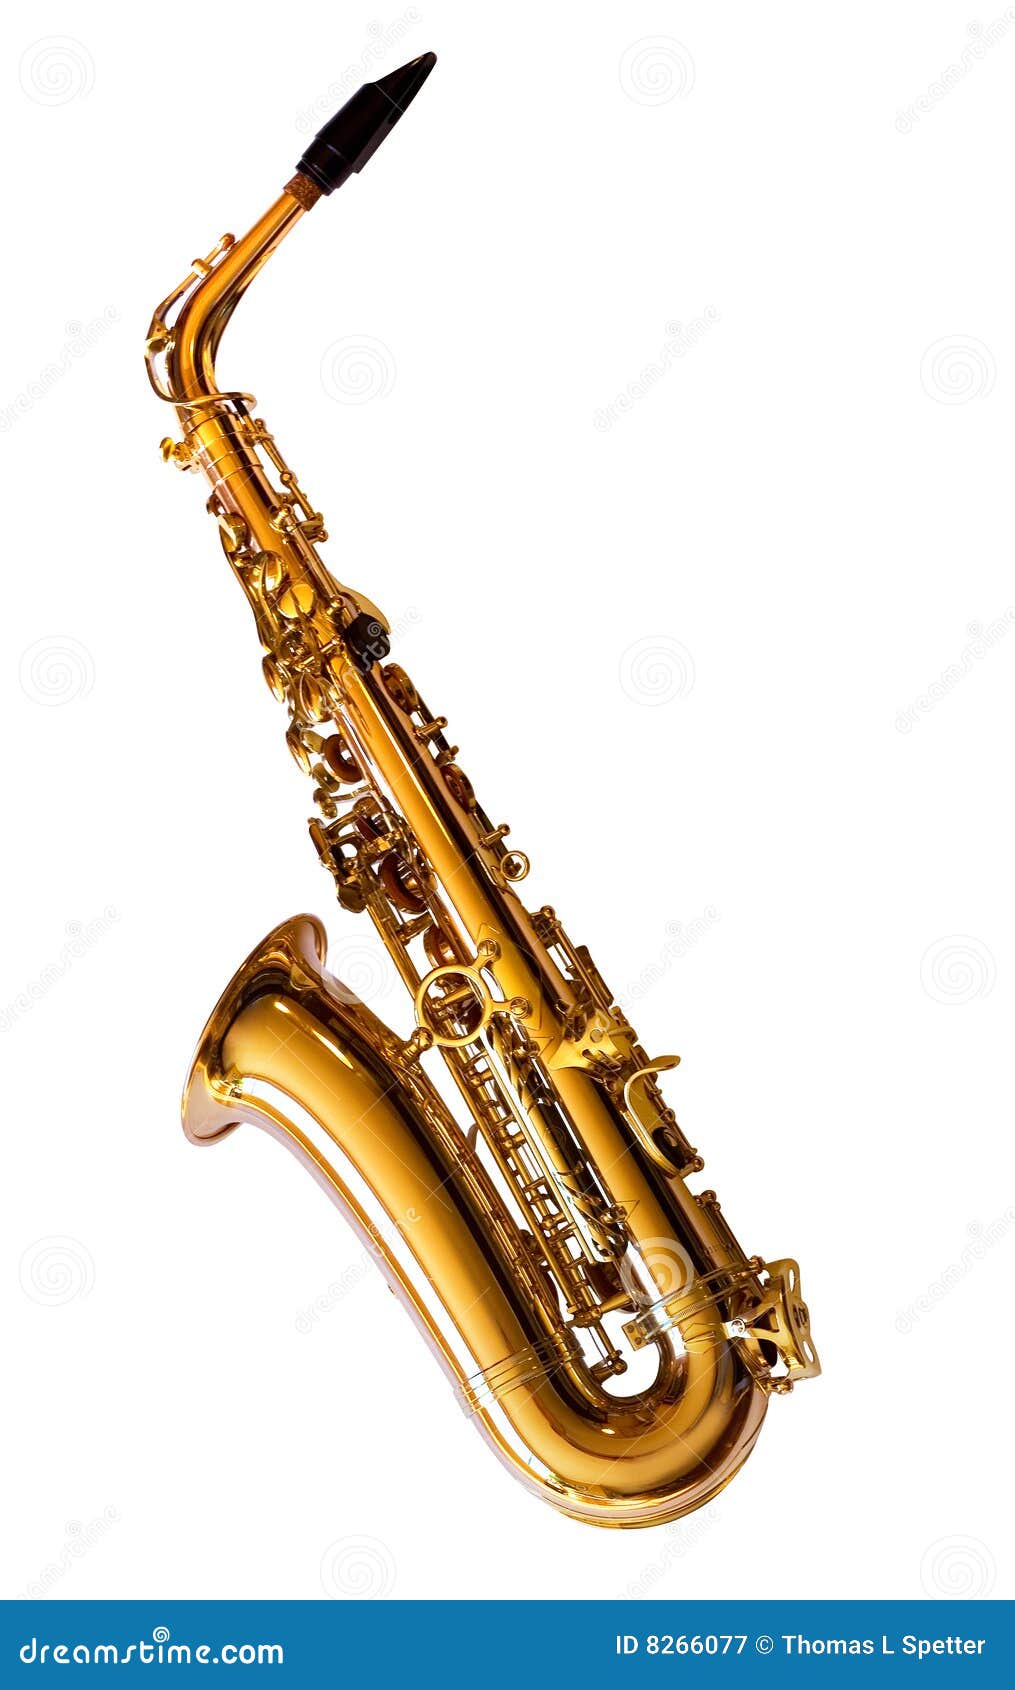 alto-saxophone-8266077.jpg